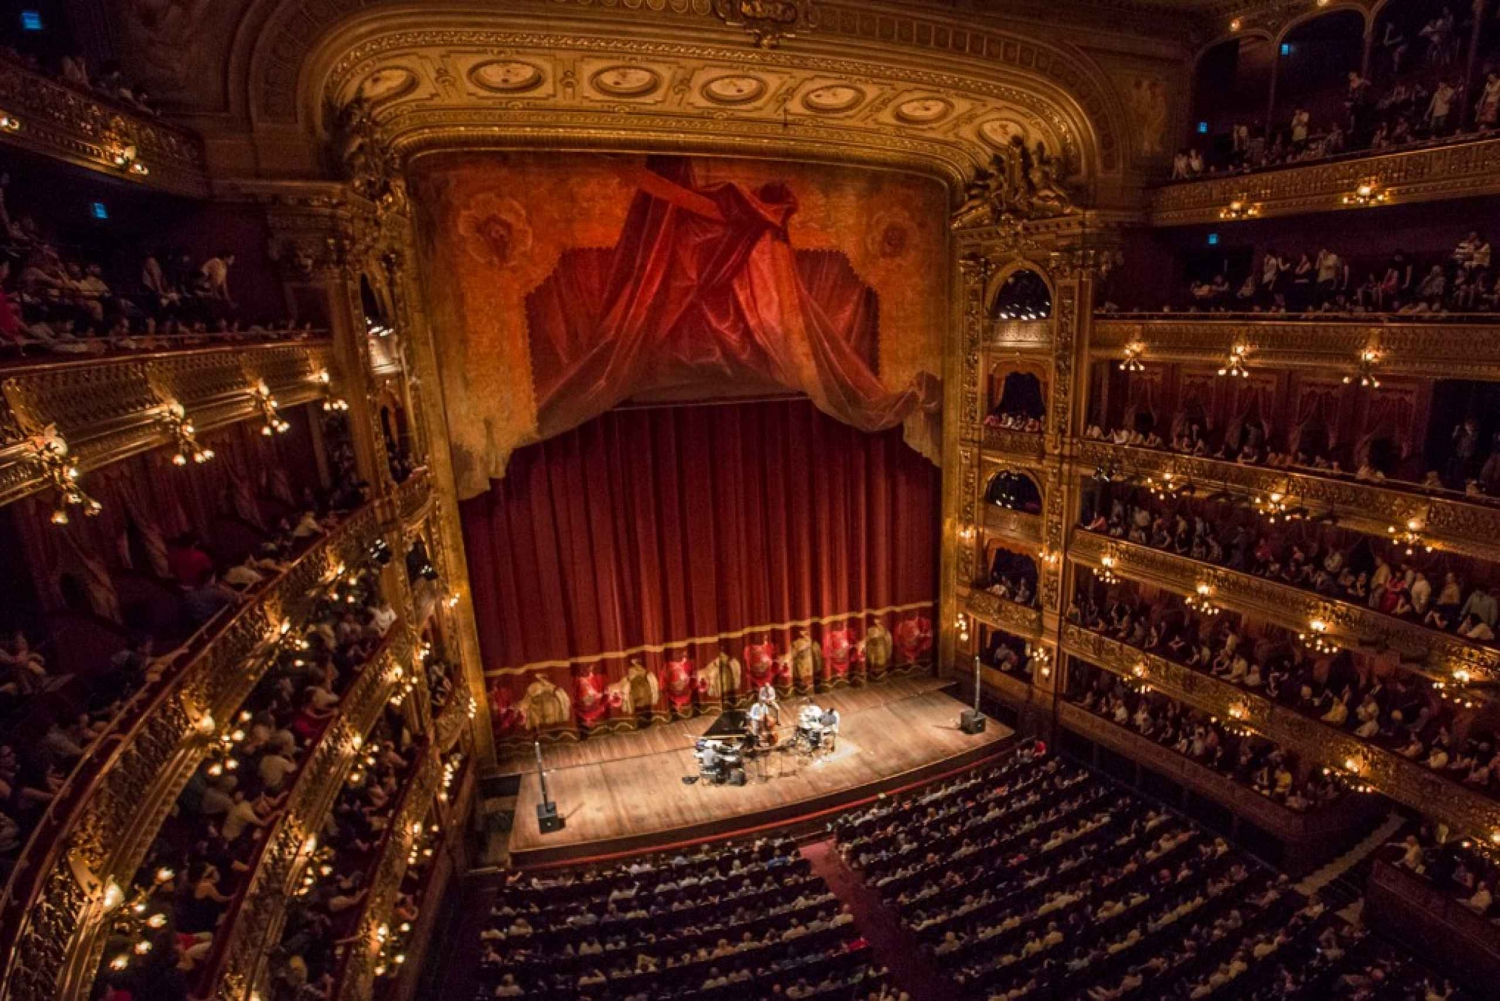 Buenos Aires: Tour guidato del Teatro Colon